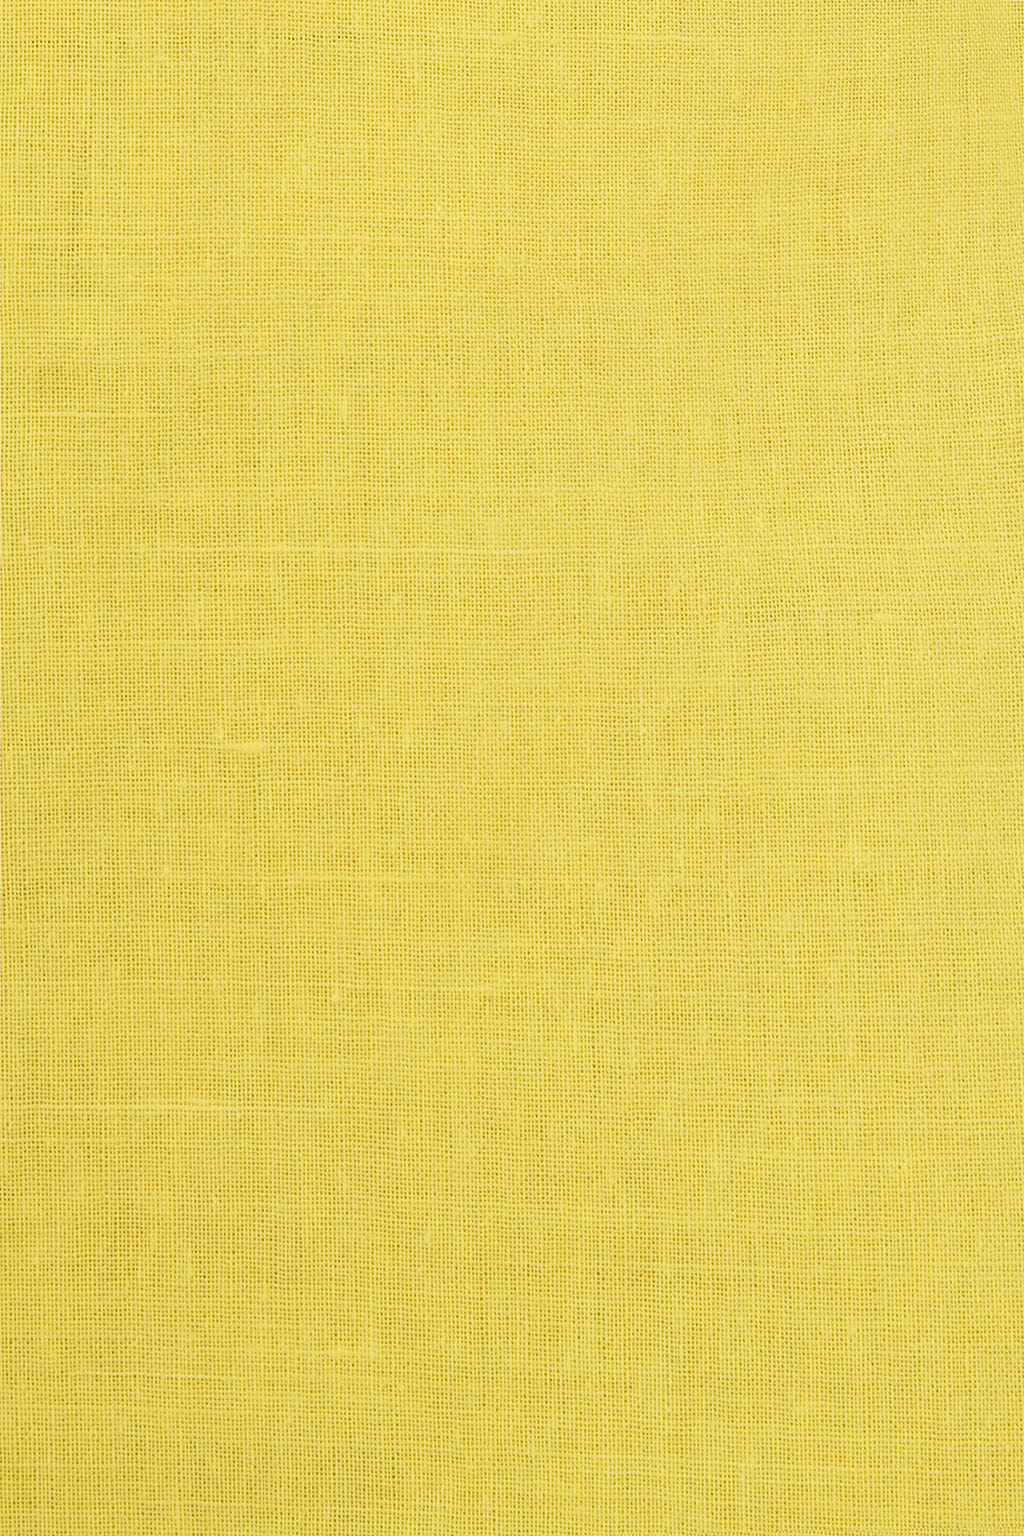 Chick Yellow Linen